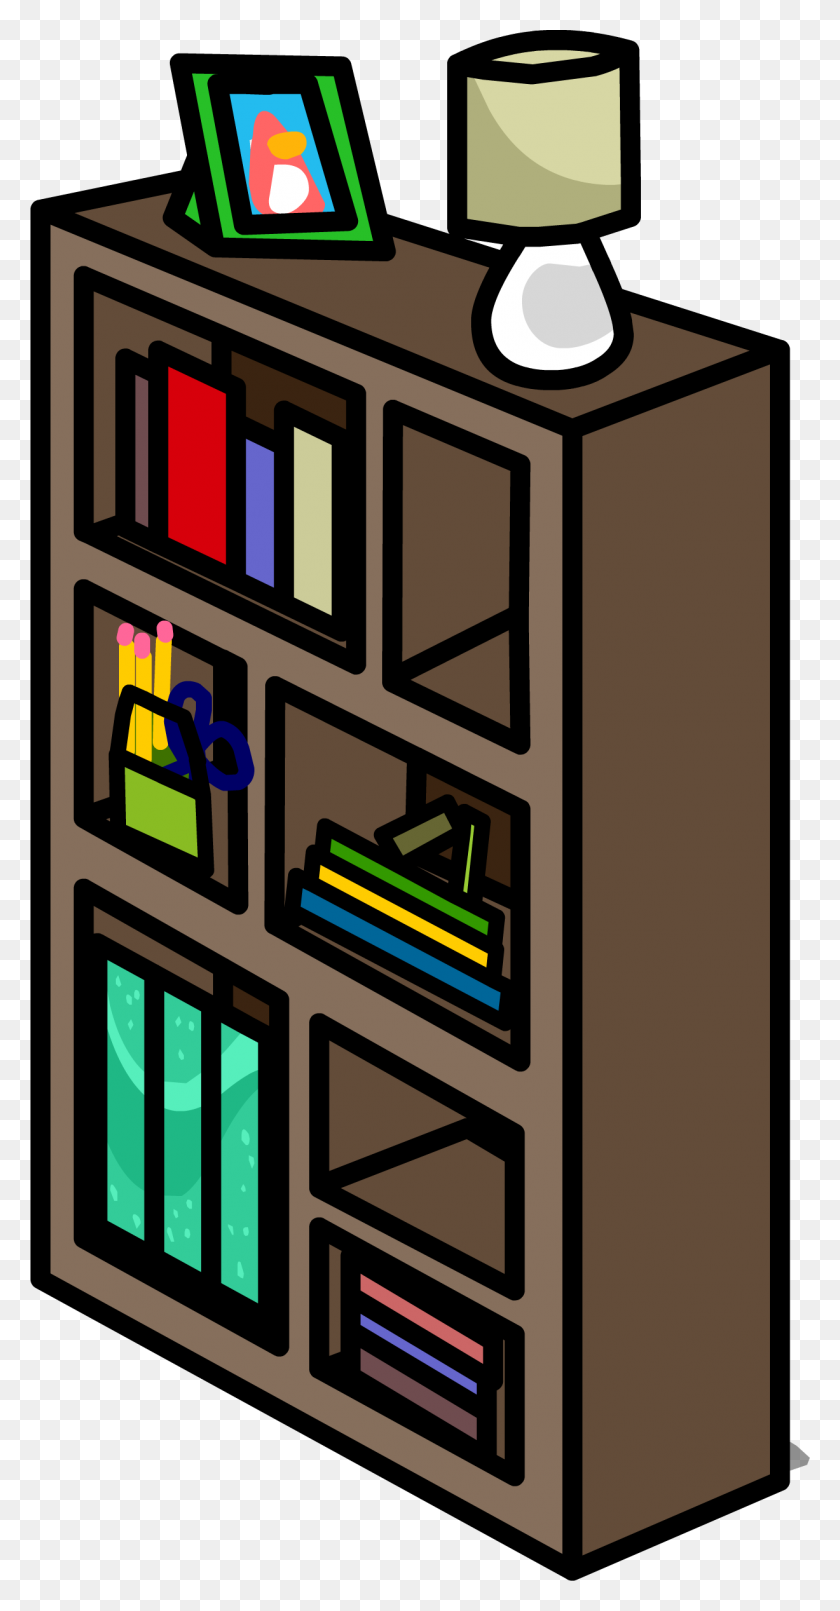 Bookshelf I - Bookshelf PNG - FlyClipart